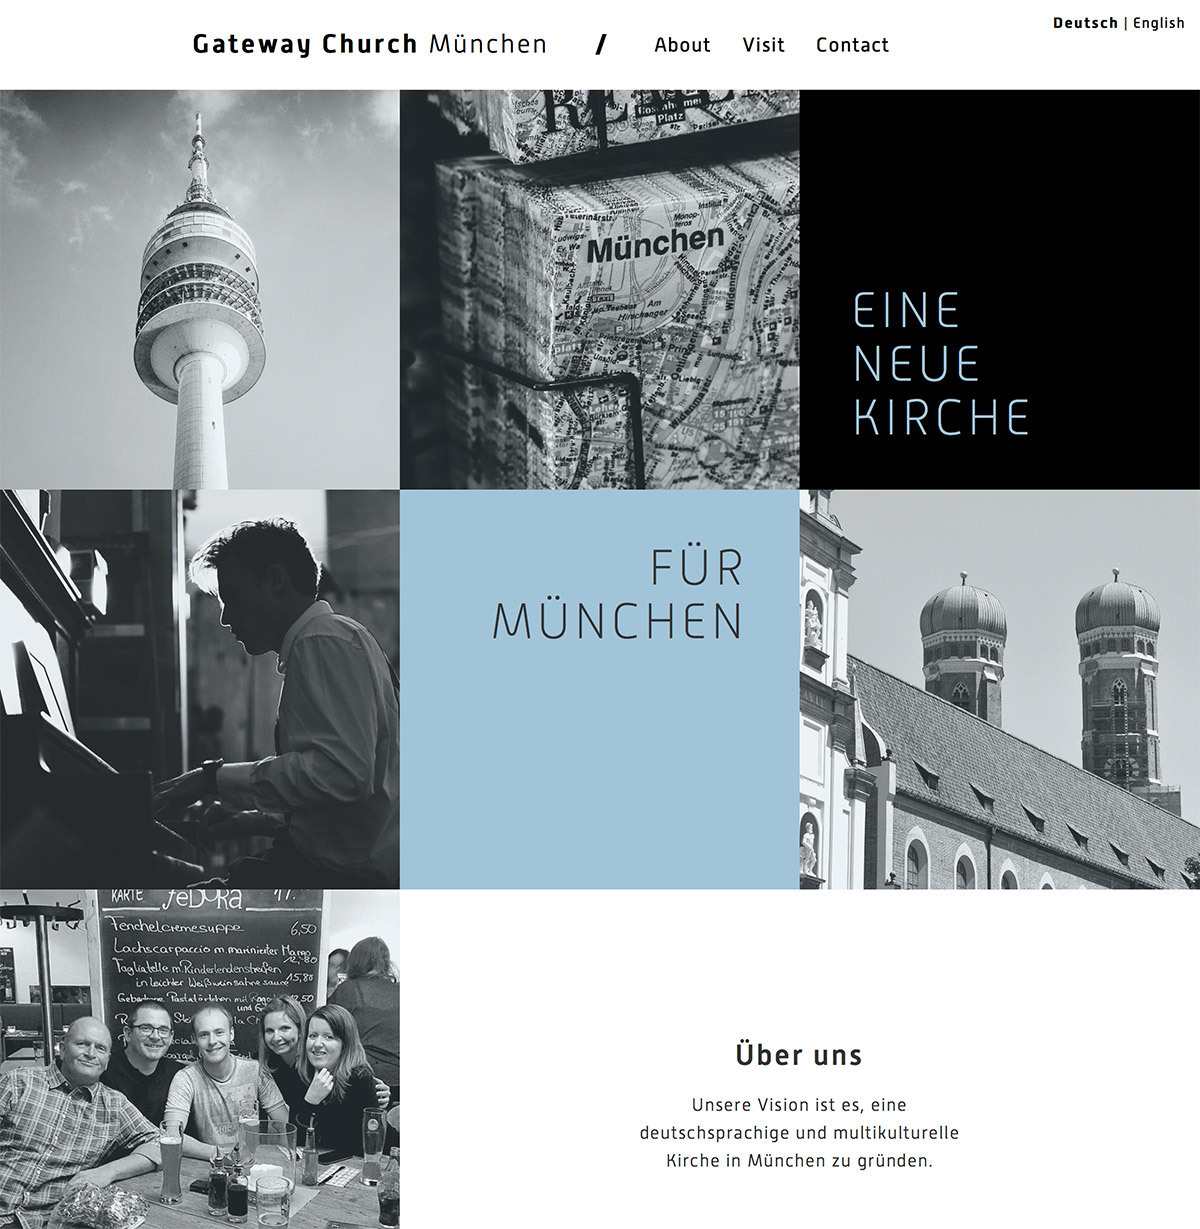 gateway-church-munchen-home-page.jpg